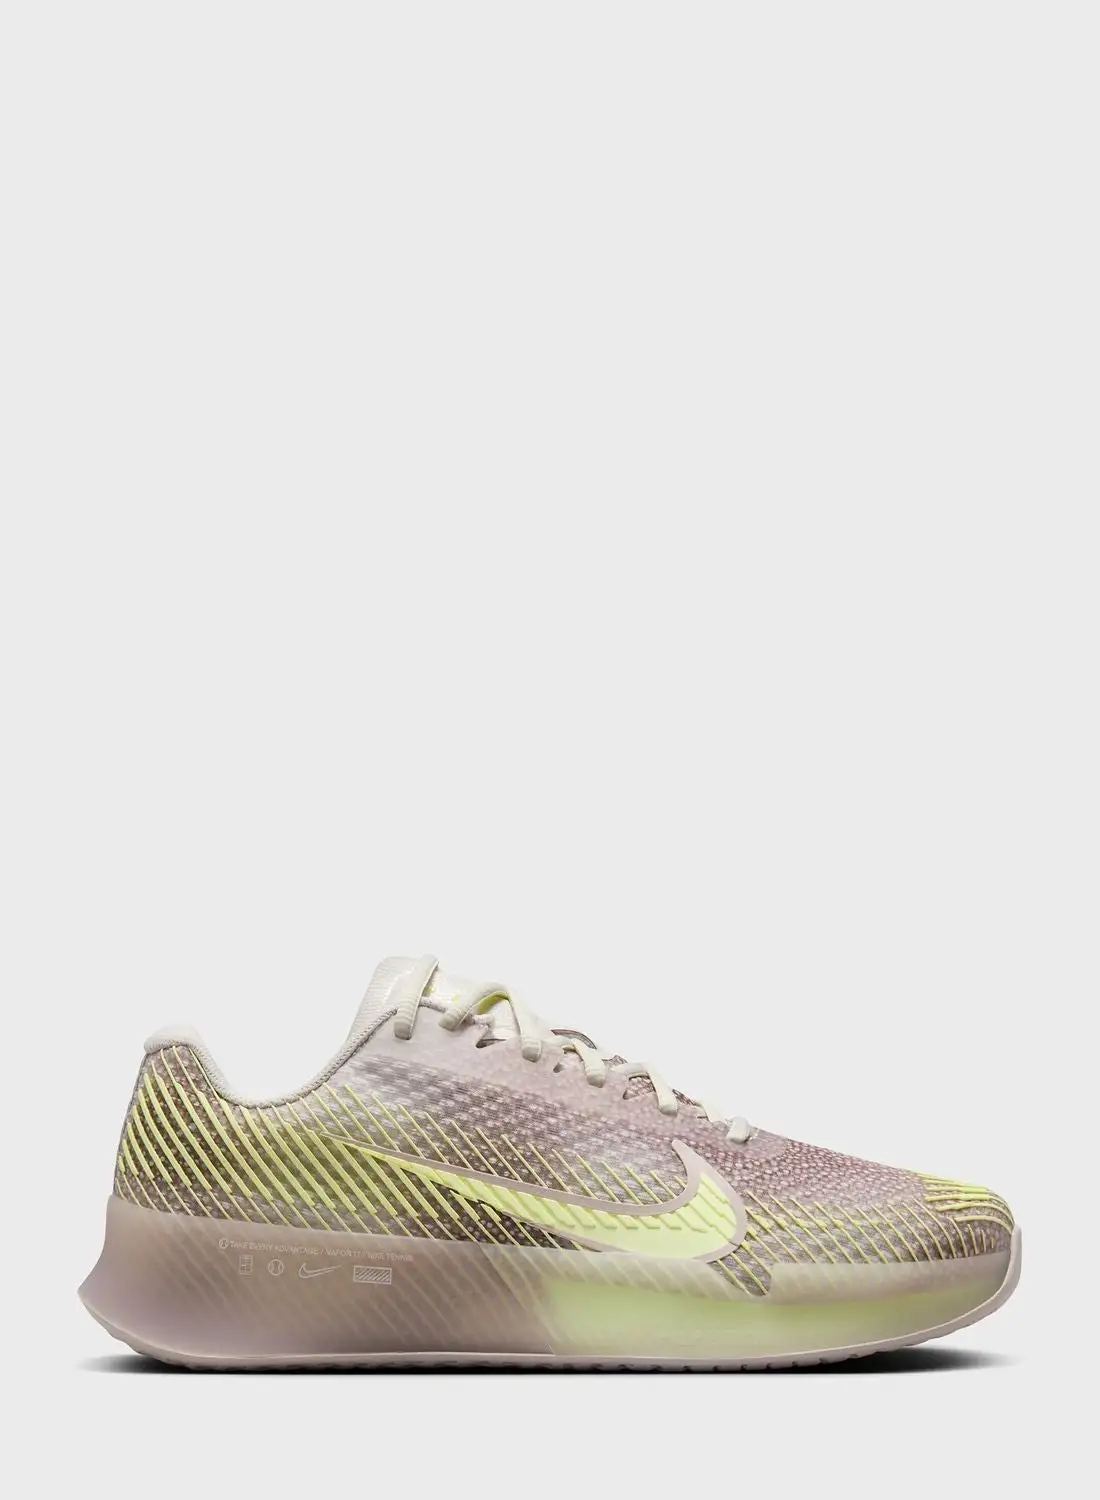 Nike Zoom Vapor 11 Hc Premium